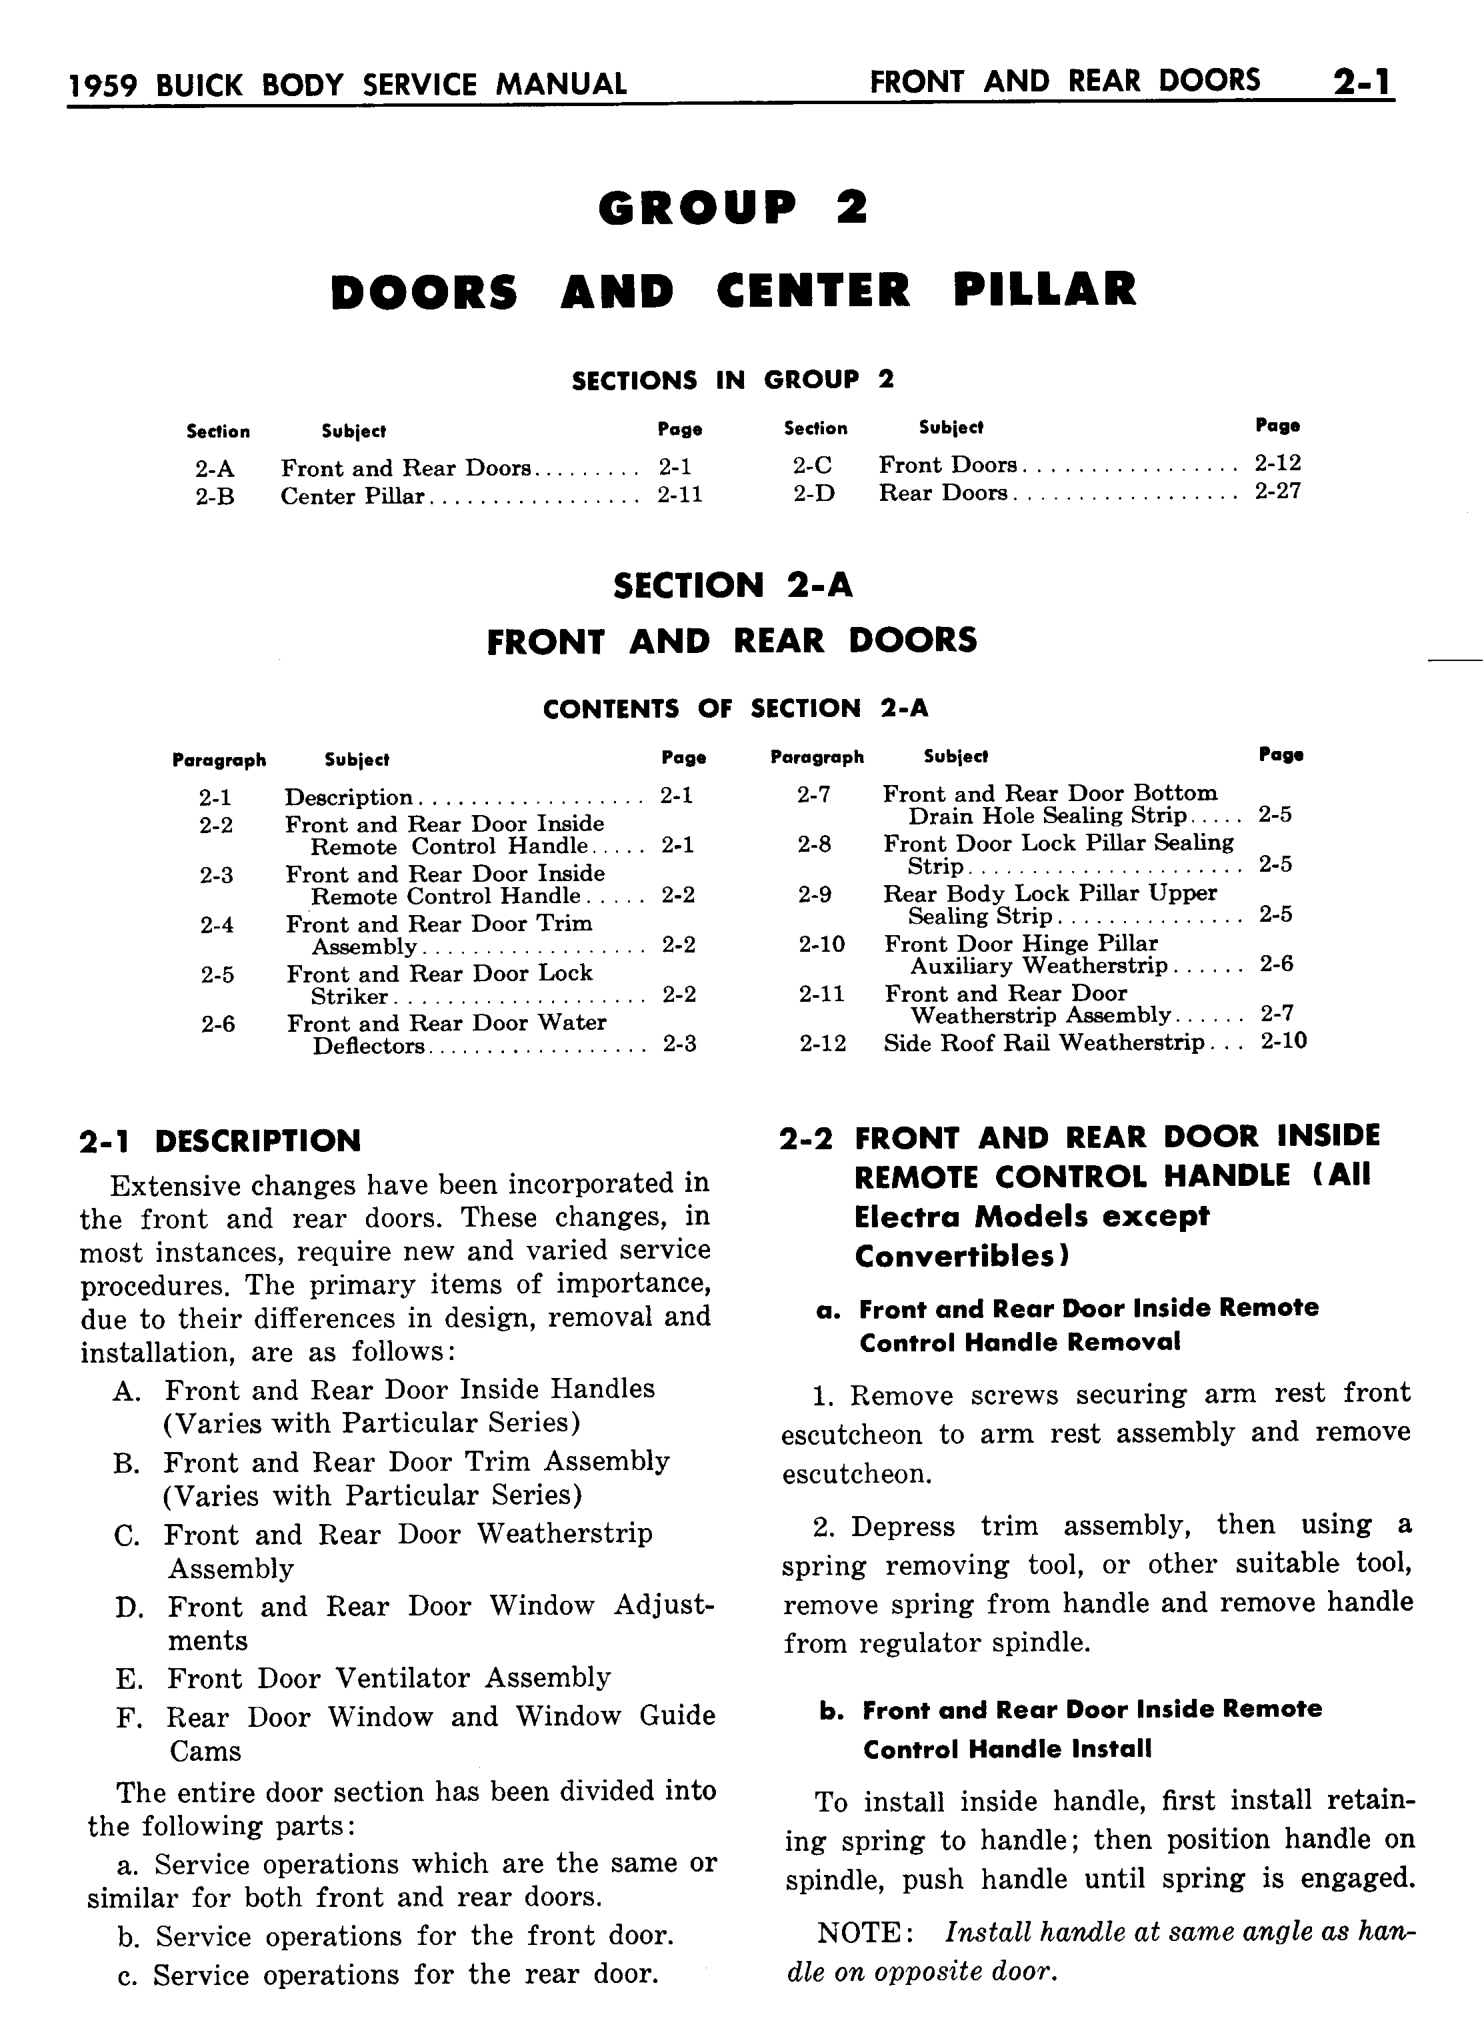 n_03 1959 Buick Body Service-Doors_1.jpg